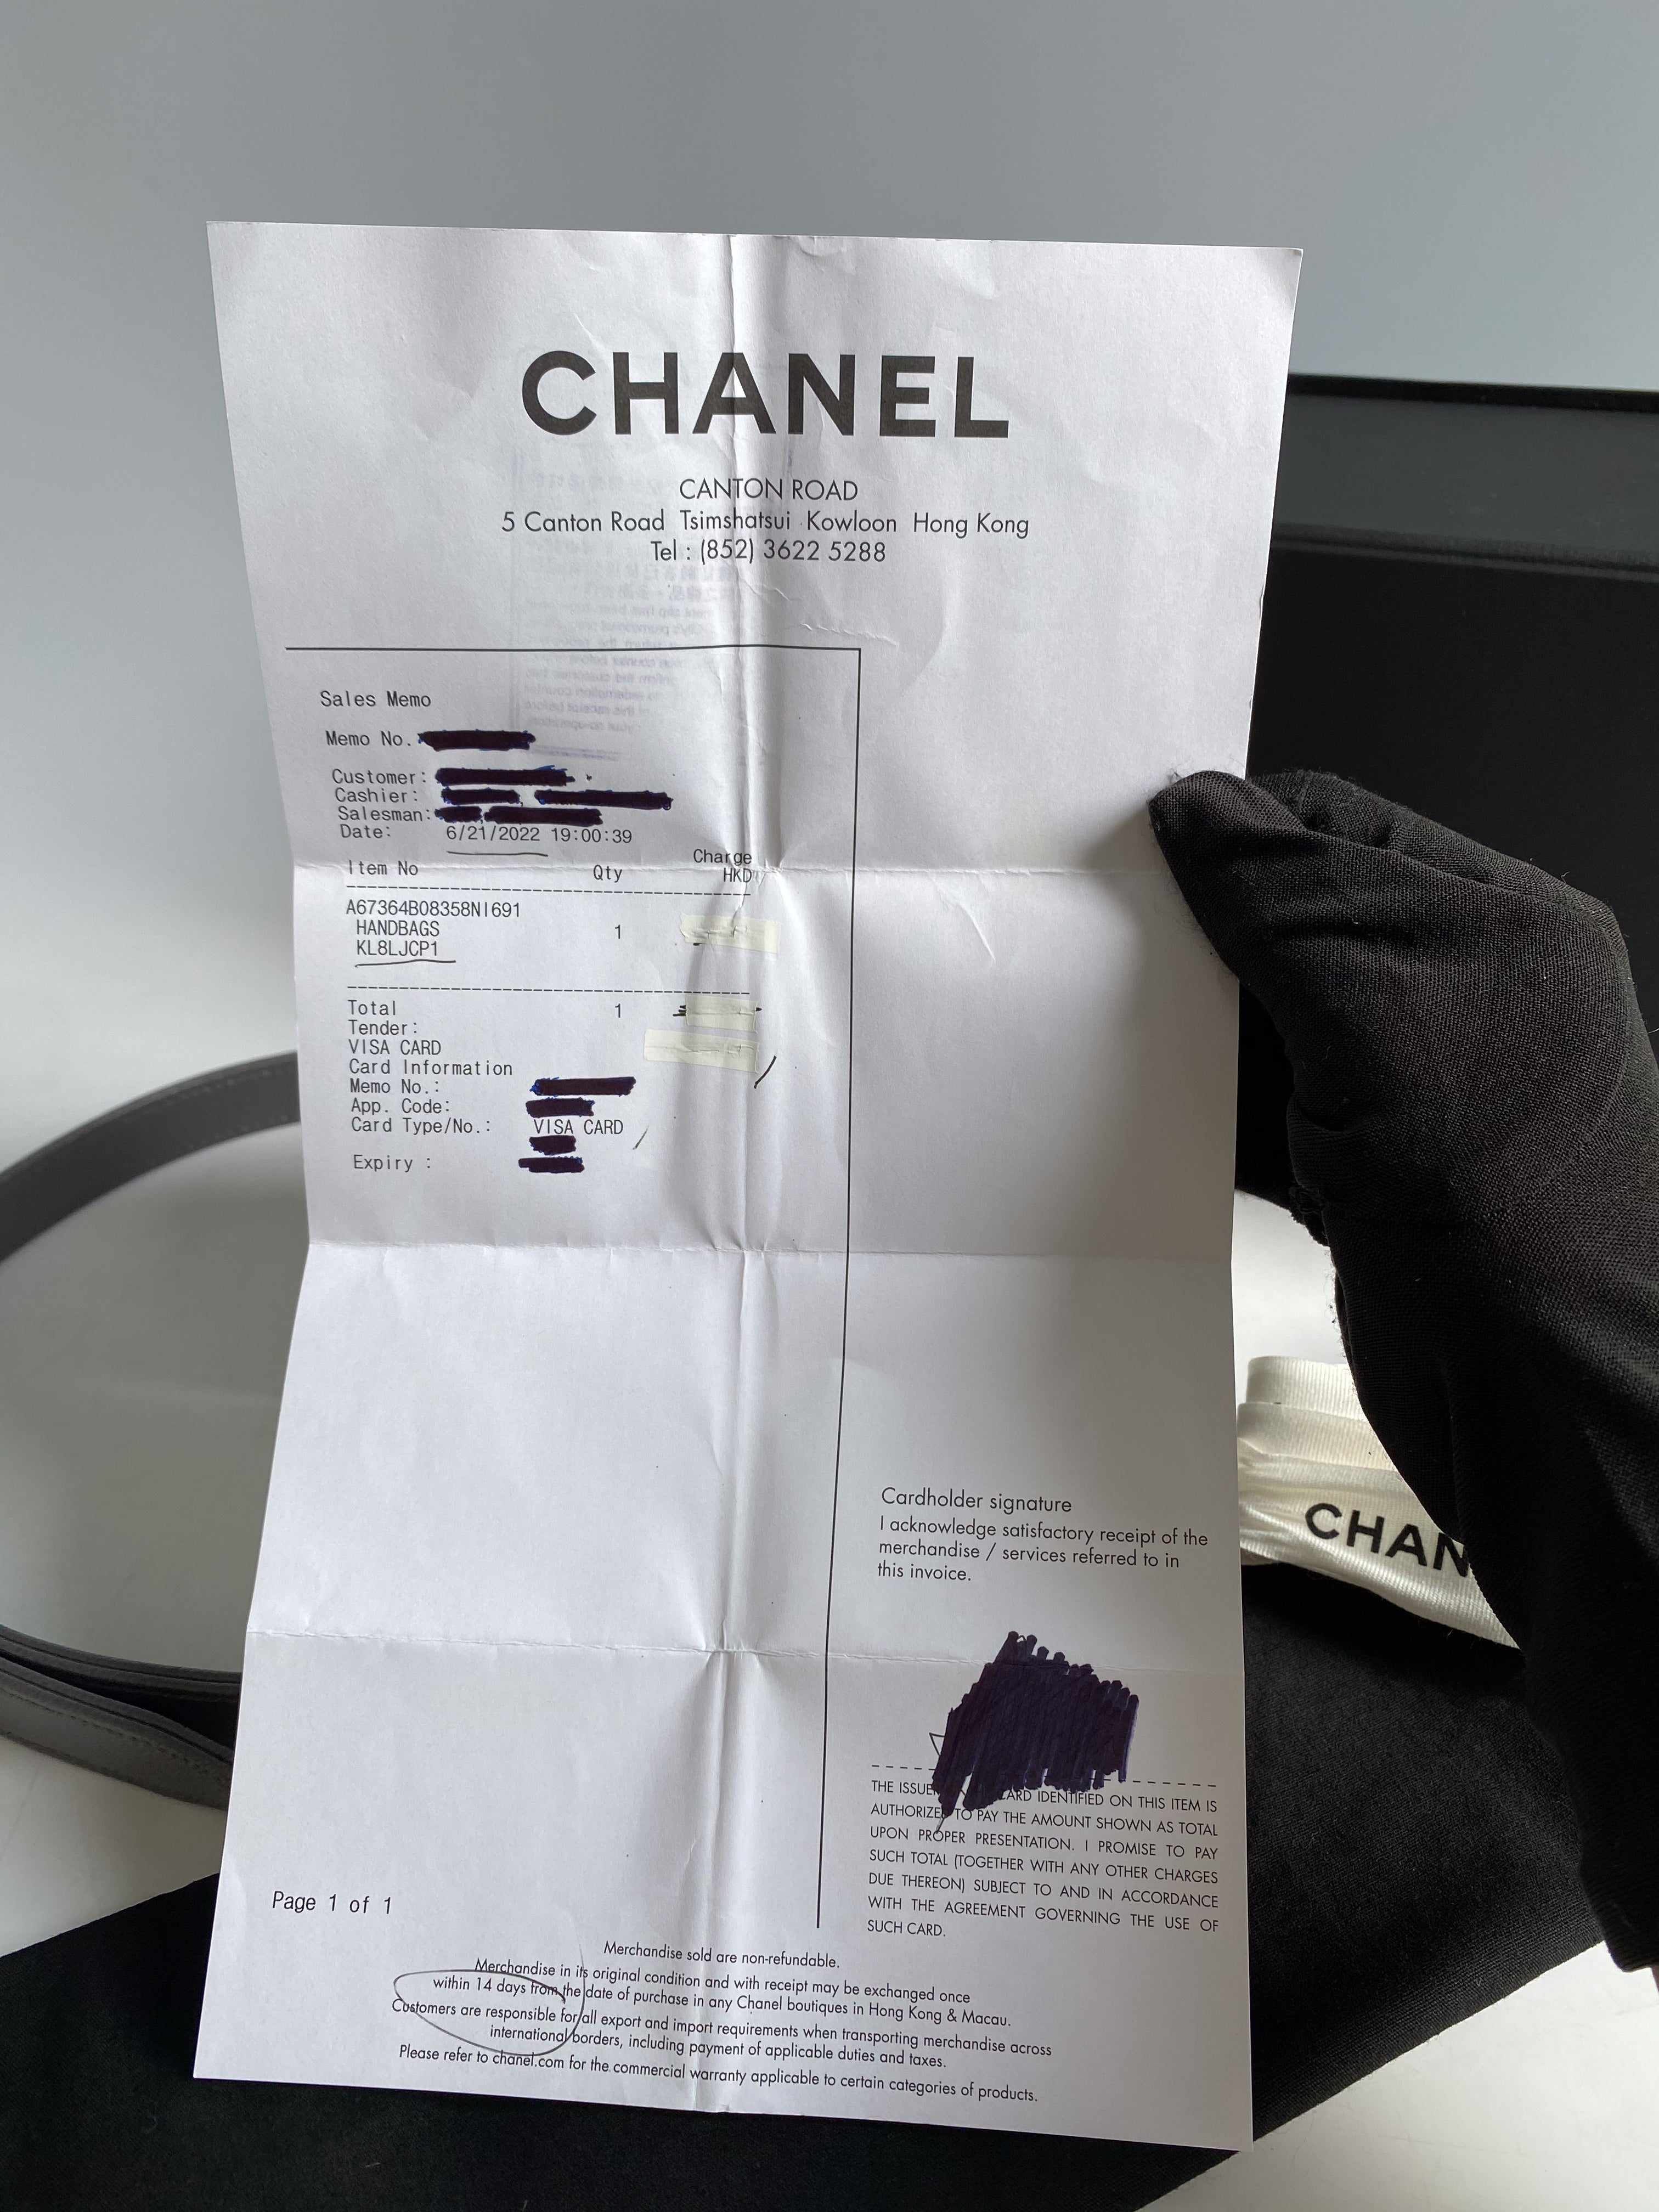 Chanel Mini Boy Dark Gray Caviar Leather and Aged Gold Hardware (Microchip)